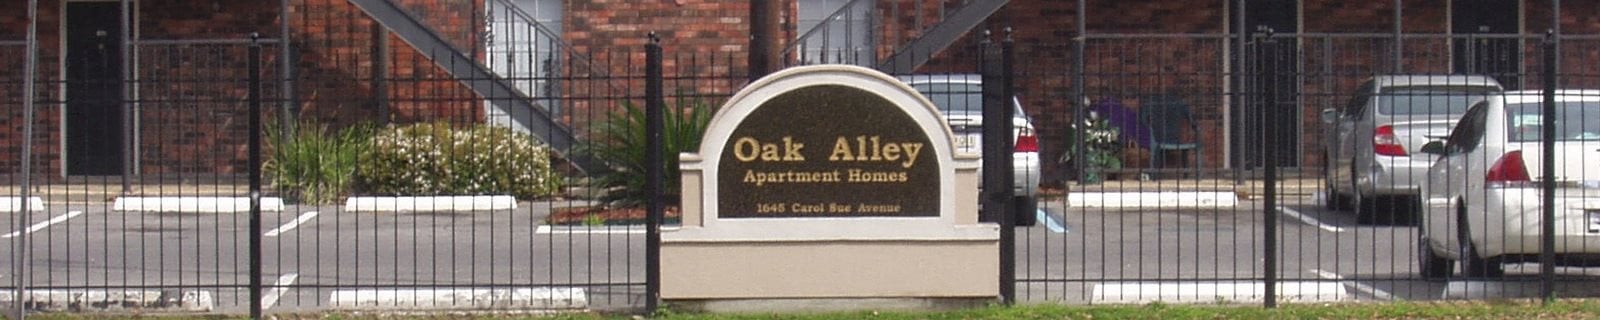 Oak Alley Apartments - Cypress Communities